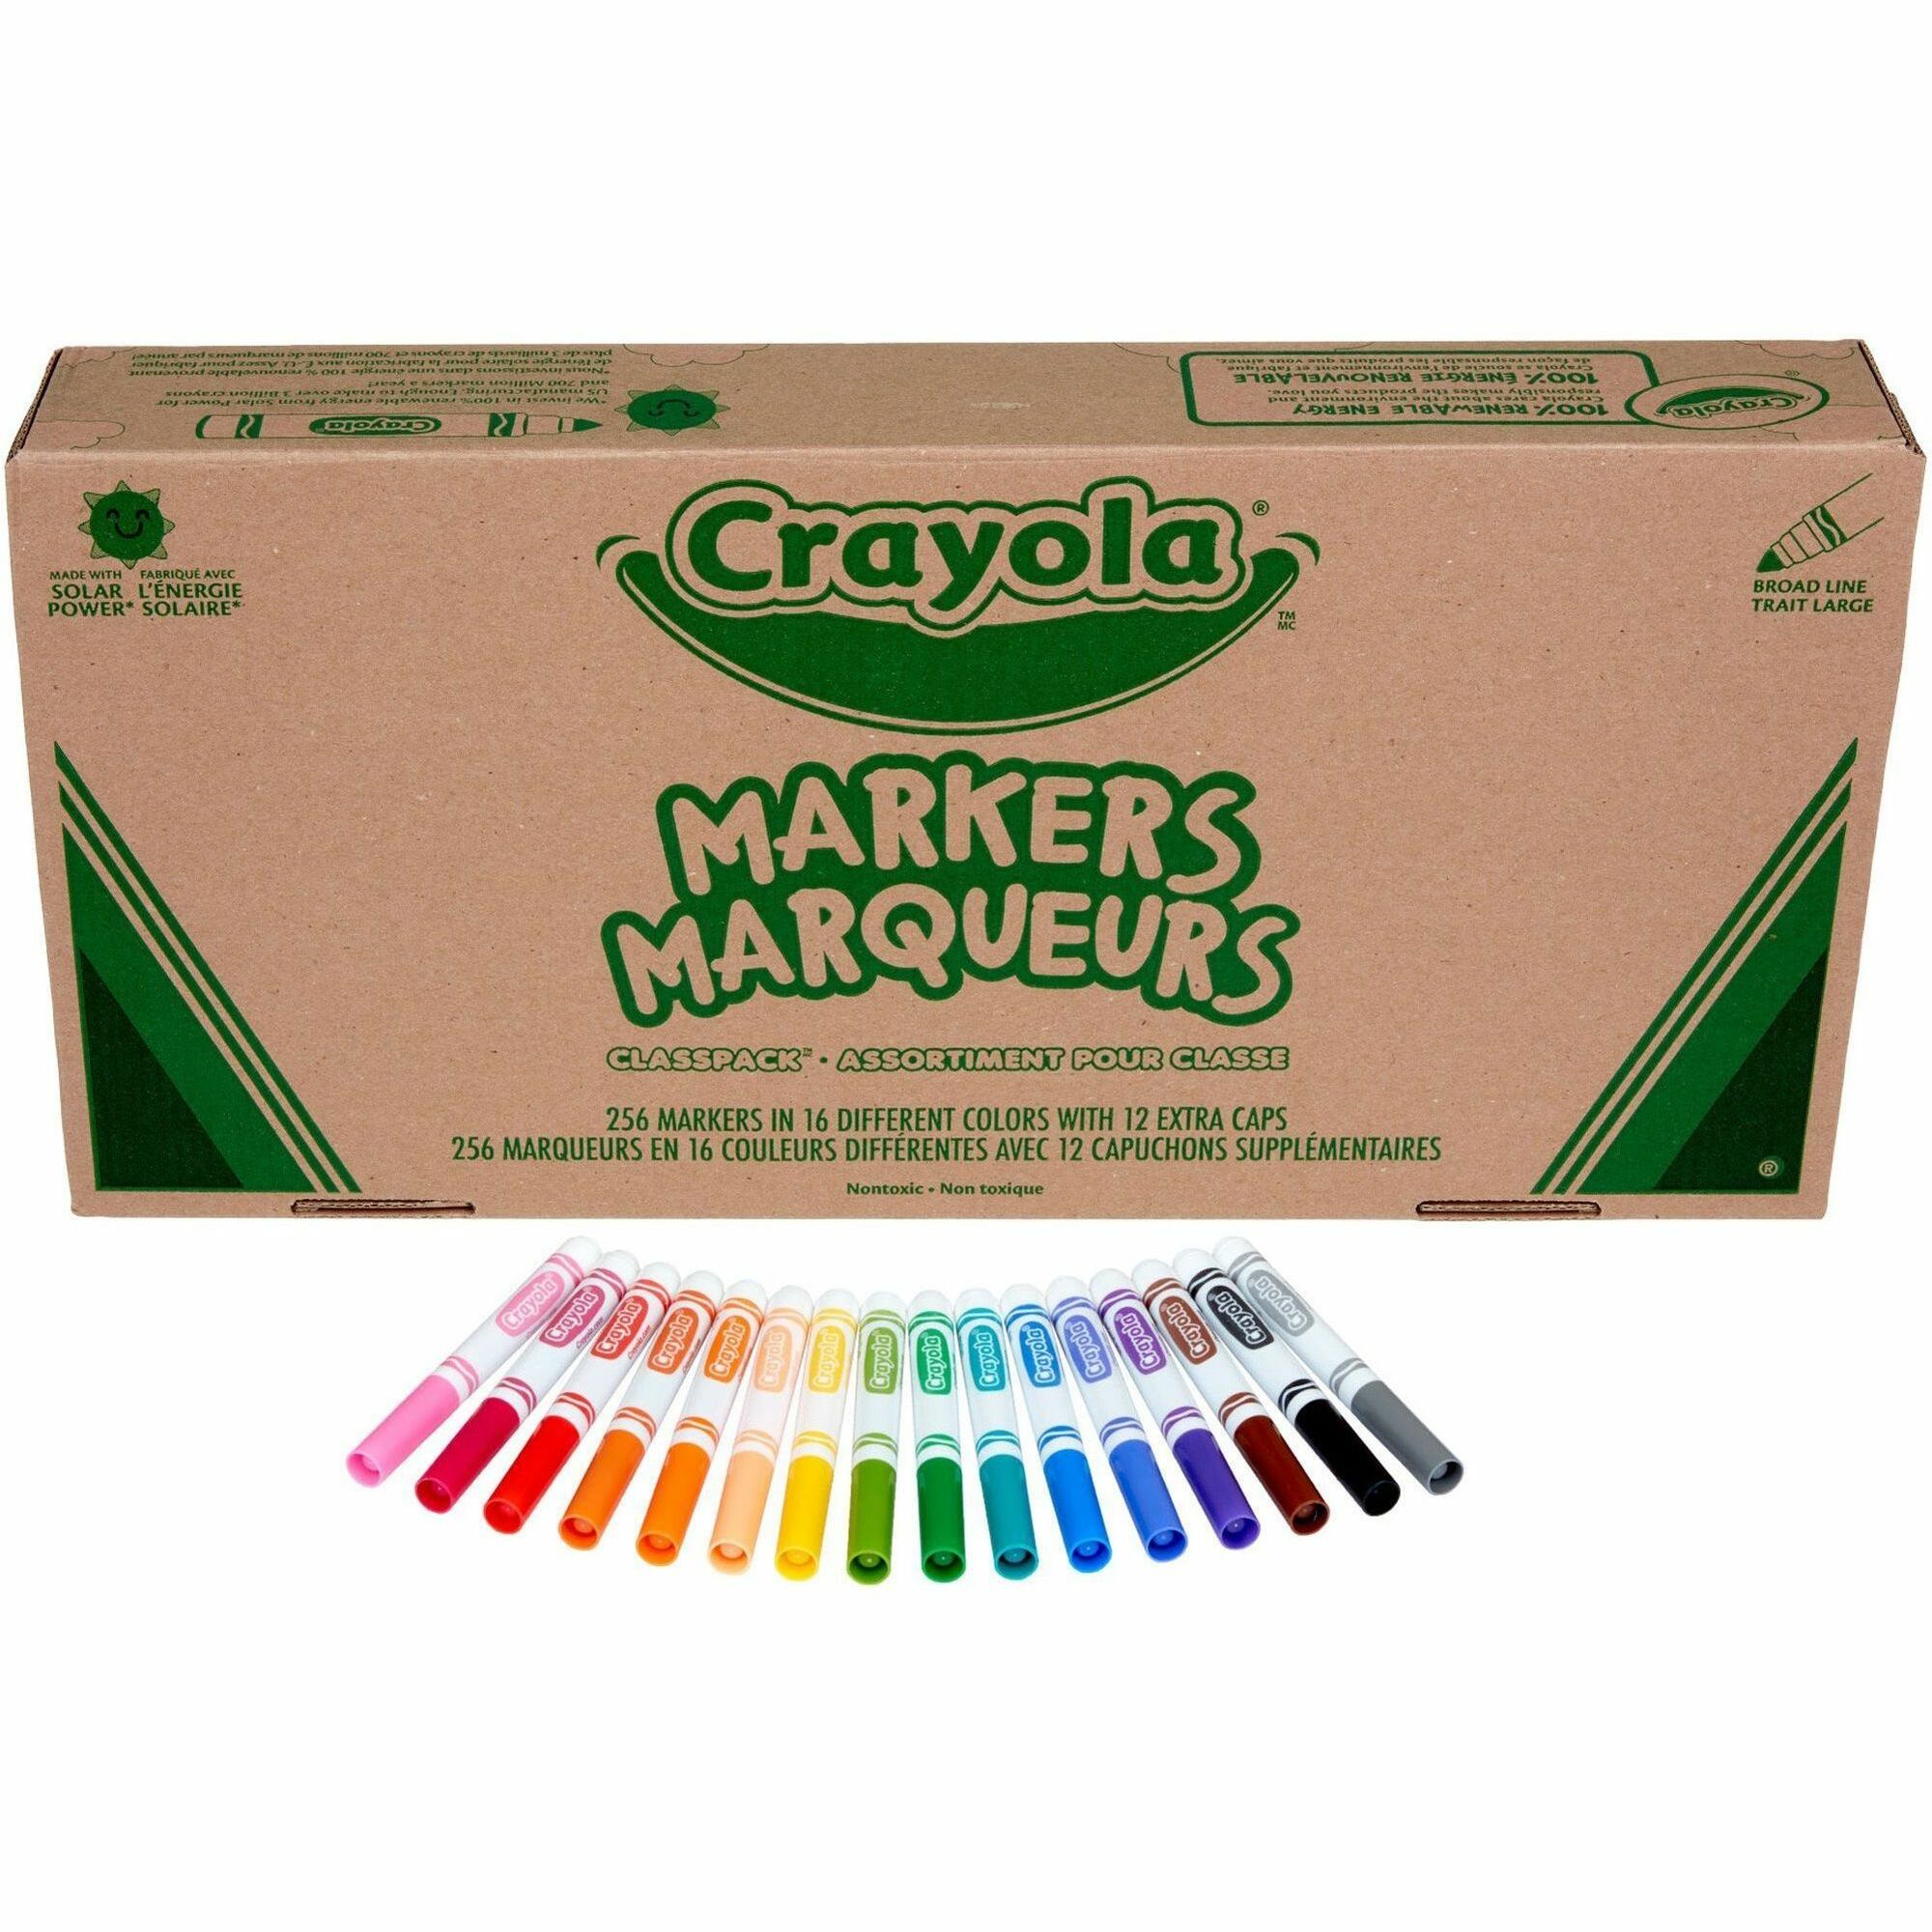 Crayola Colored Pencils Bulk, 240 Count Classpack, 12 Assorted Colors